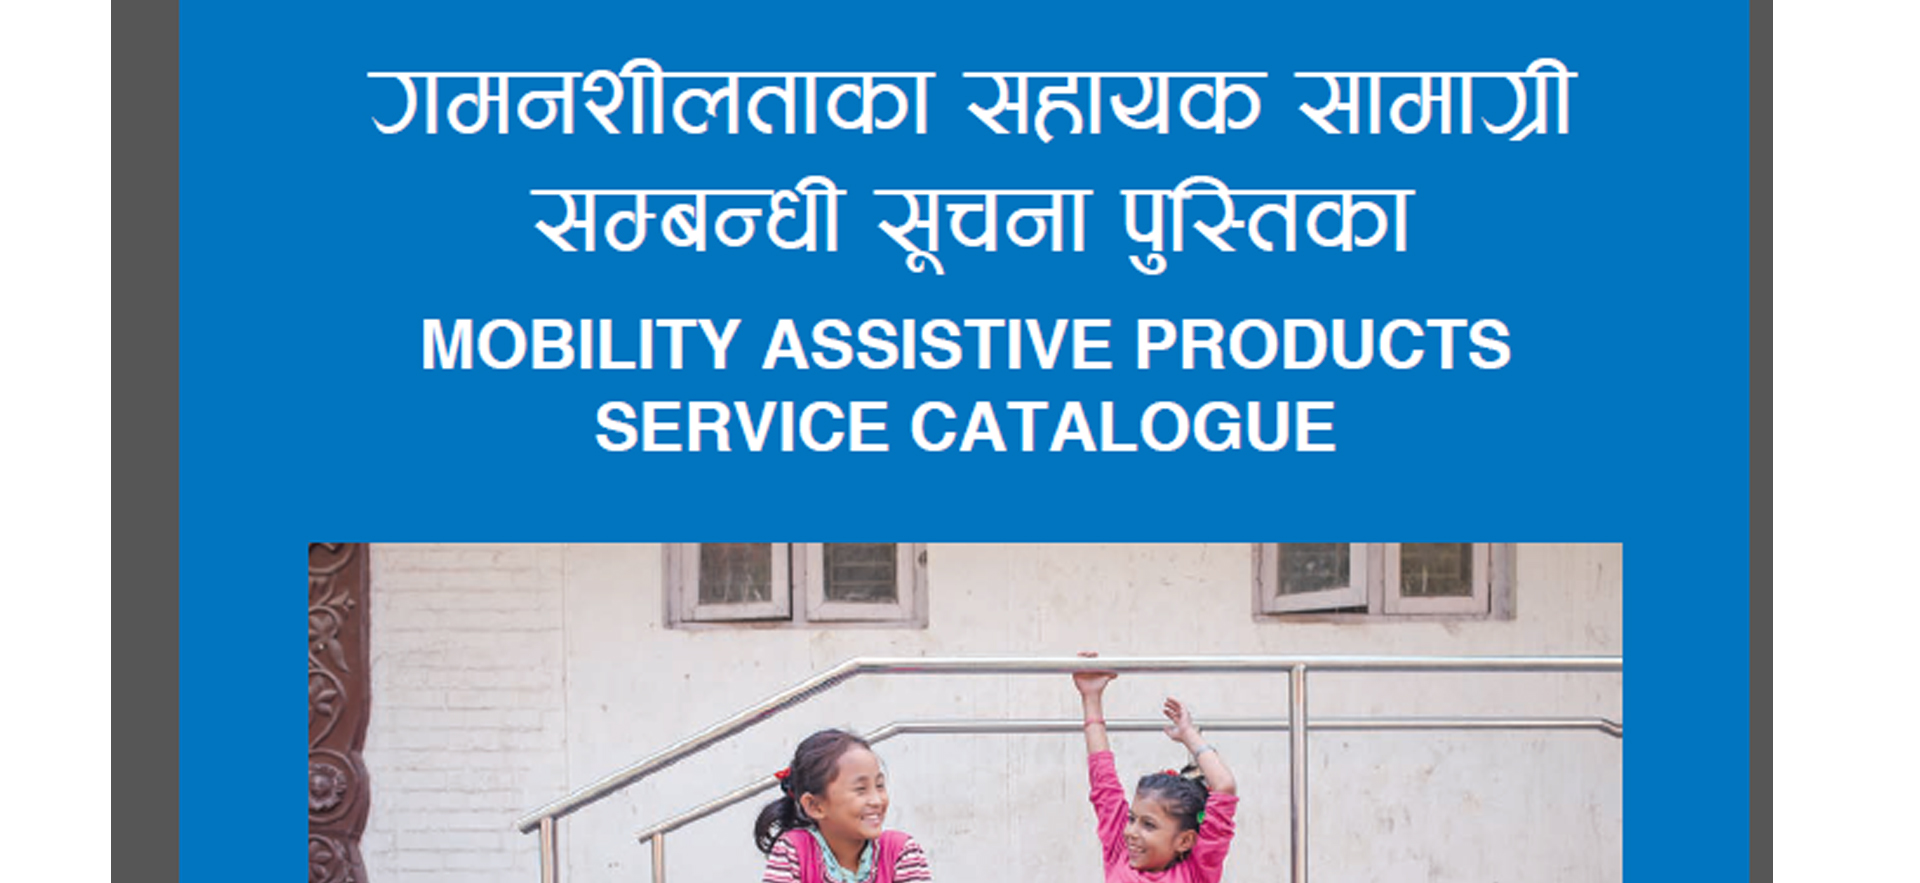 mobility-aid-catalog-2022-nepal